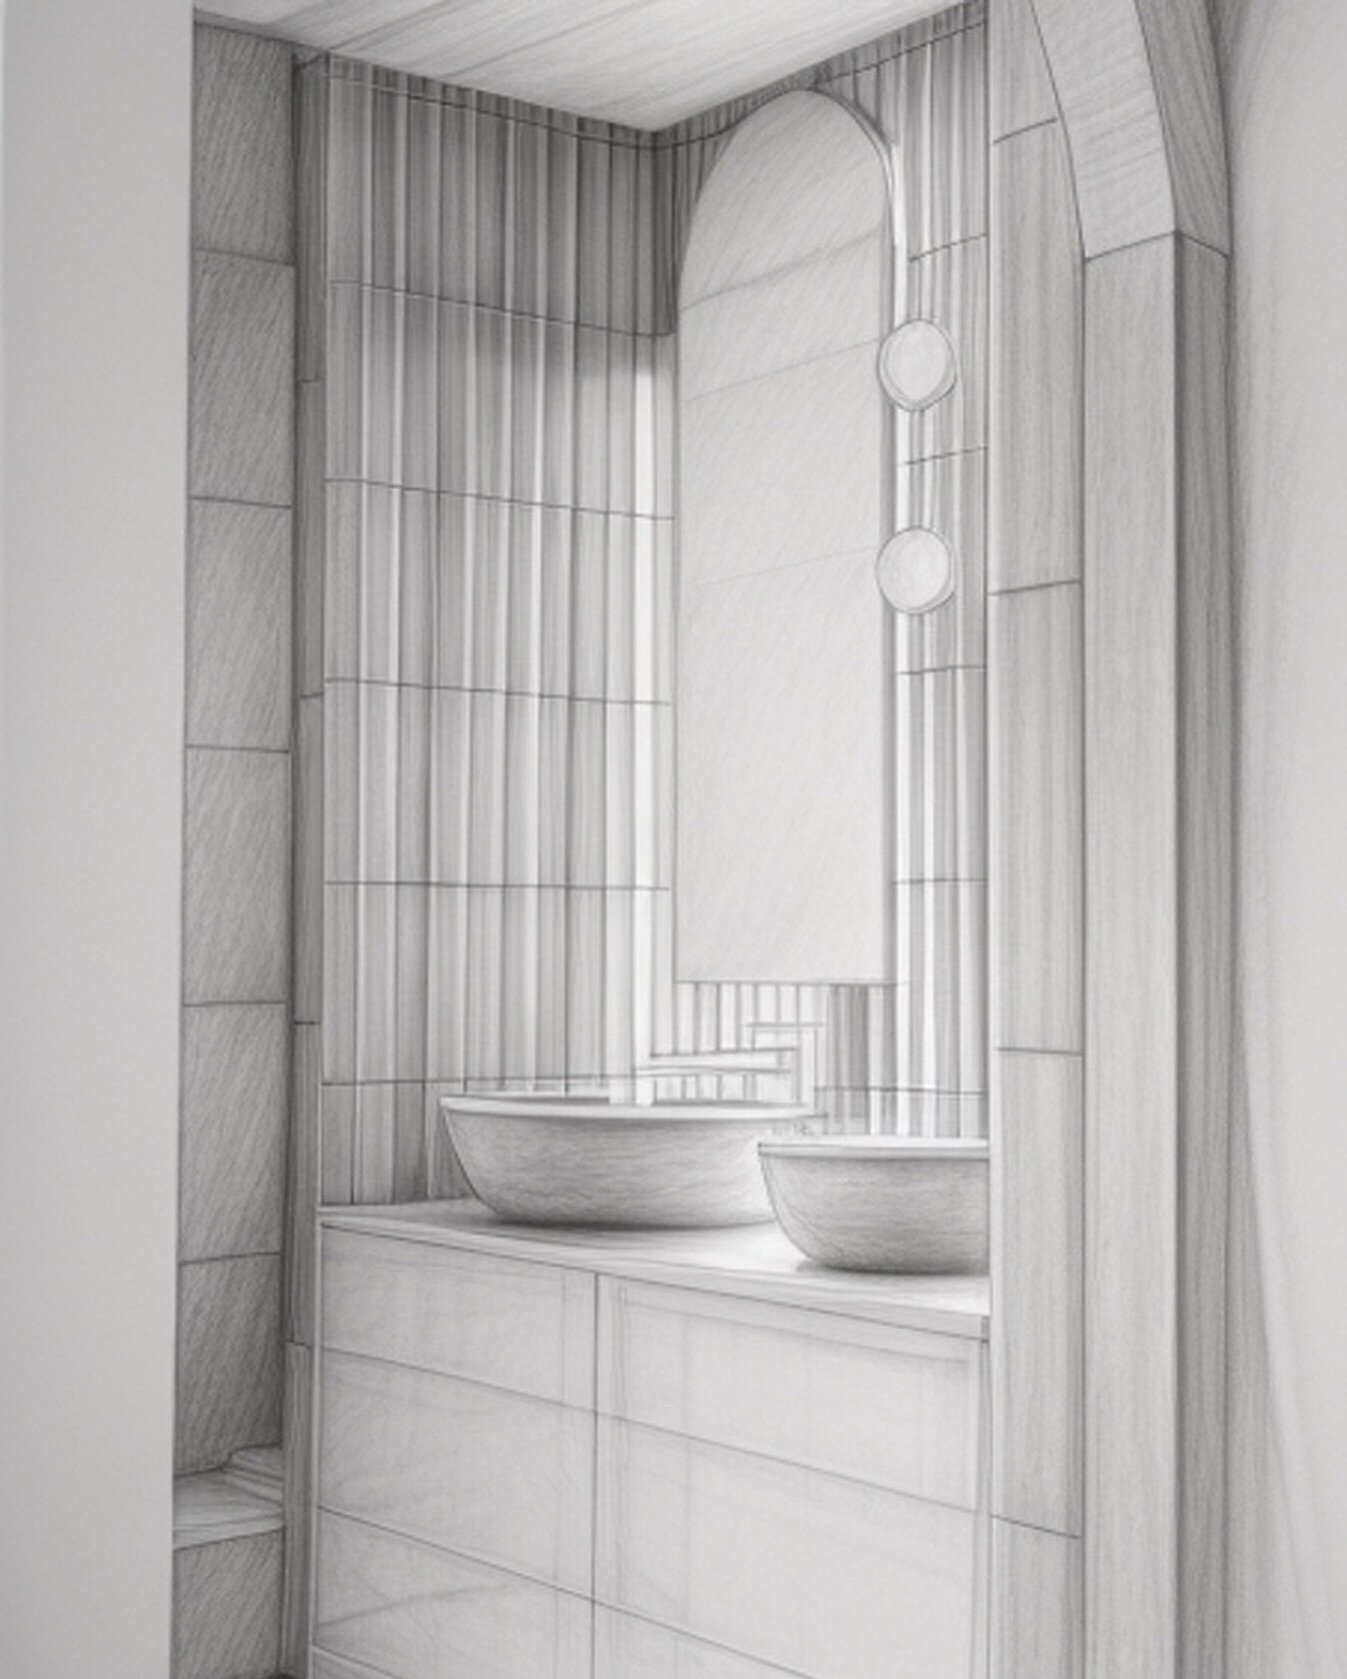 The beginning of the main bathroom at Hercules St. 
⠀⠀⠀⠀⠀⠀⠀⠀⠀
#design #interiors #interiordesign #bathroom #project #designers